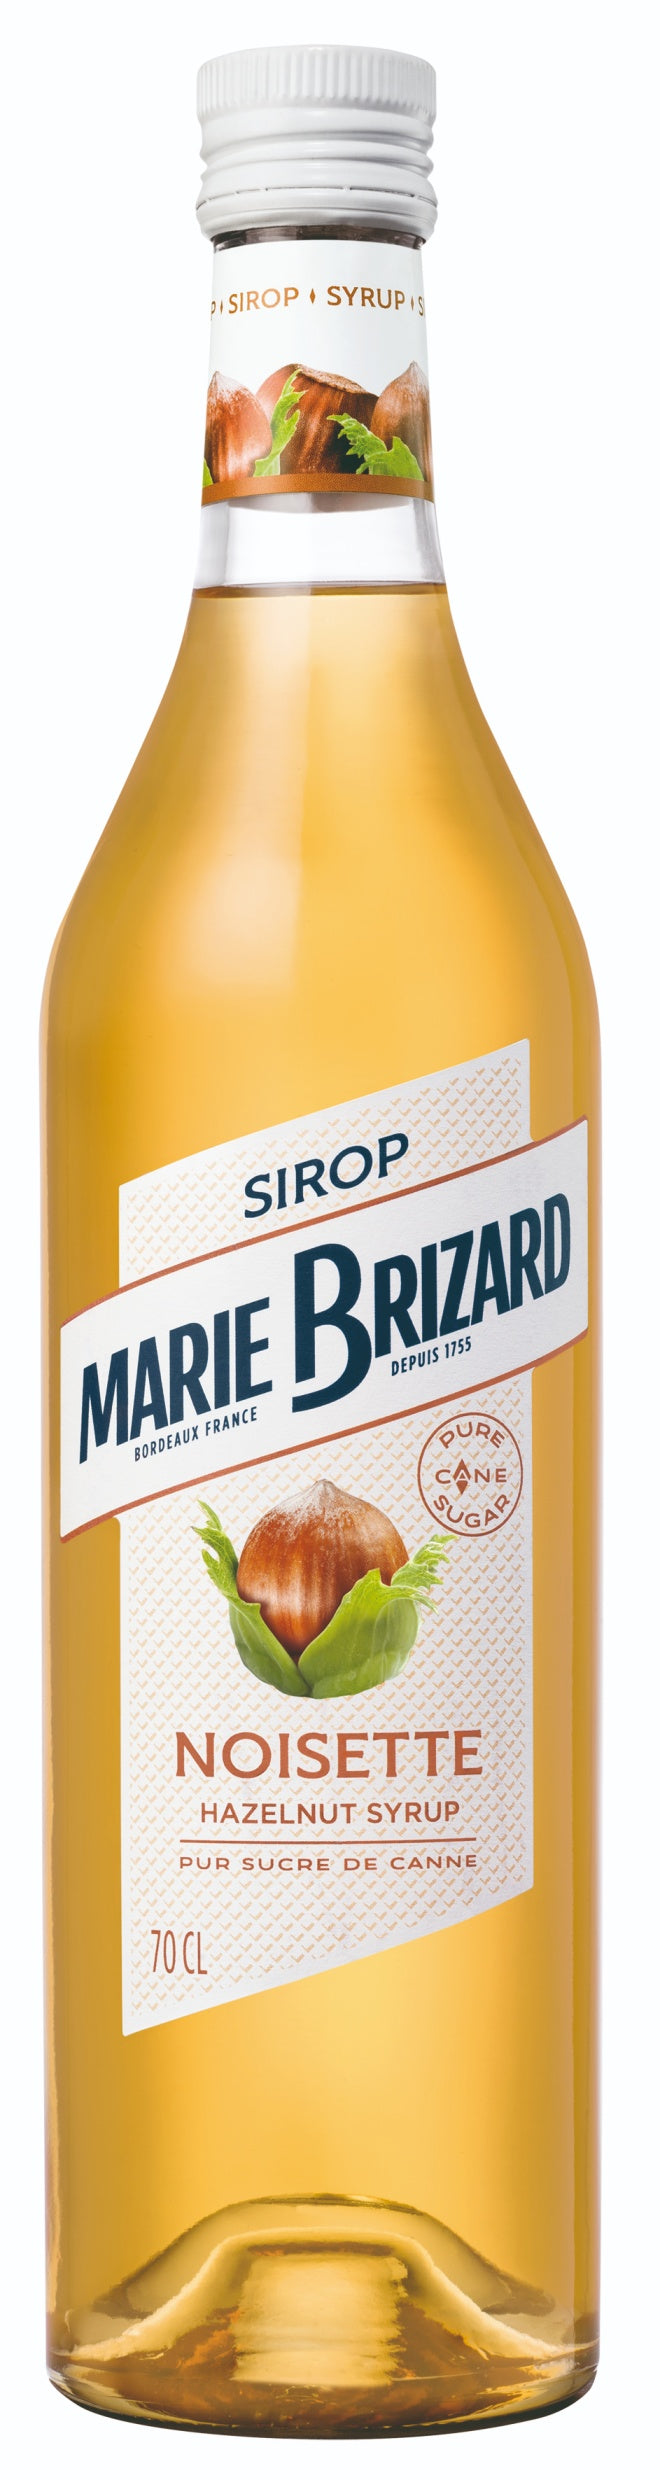 MARIE BRIZARD SIROP NOISETTE 70CL